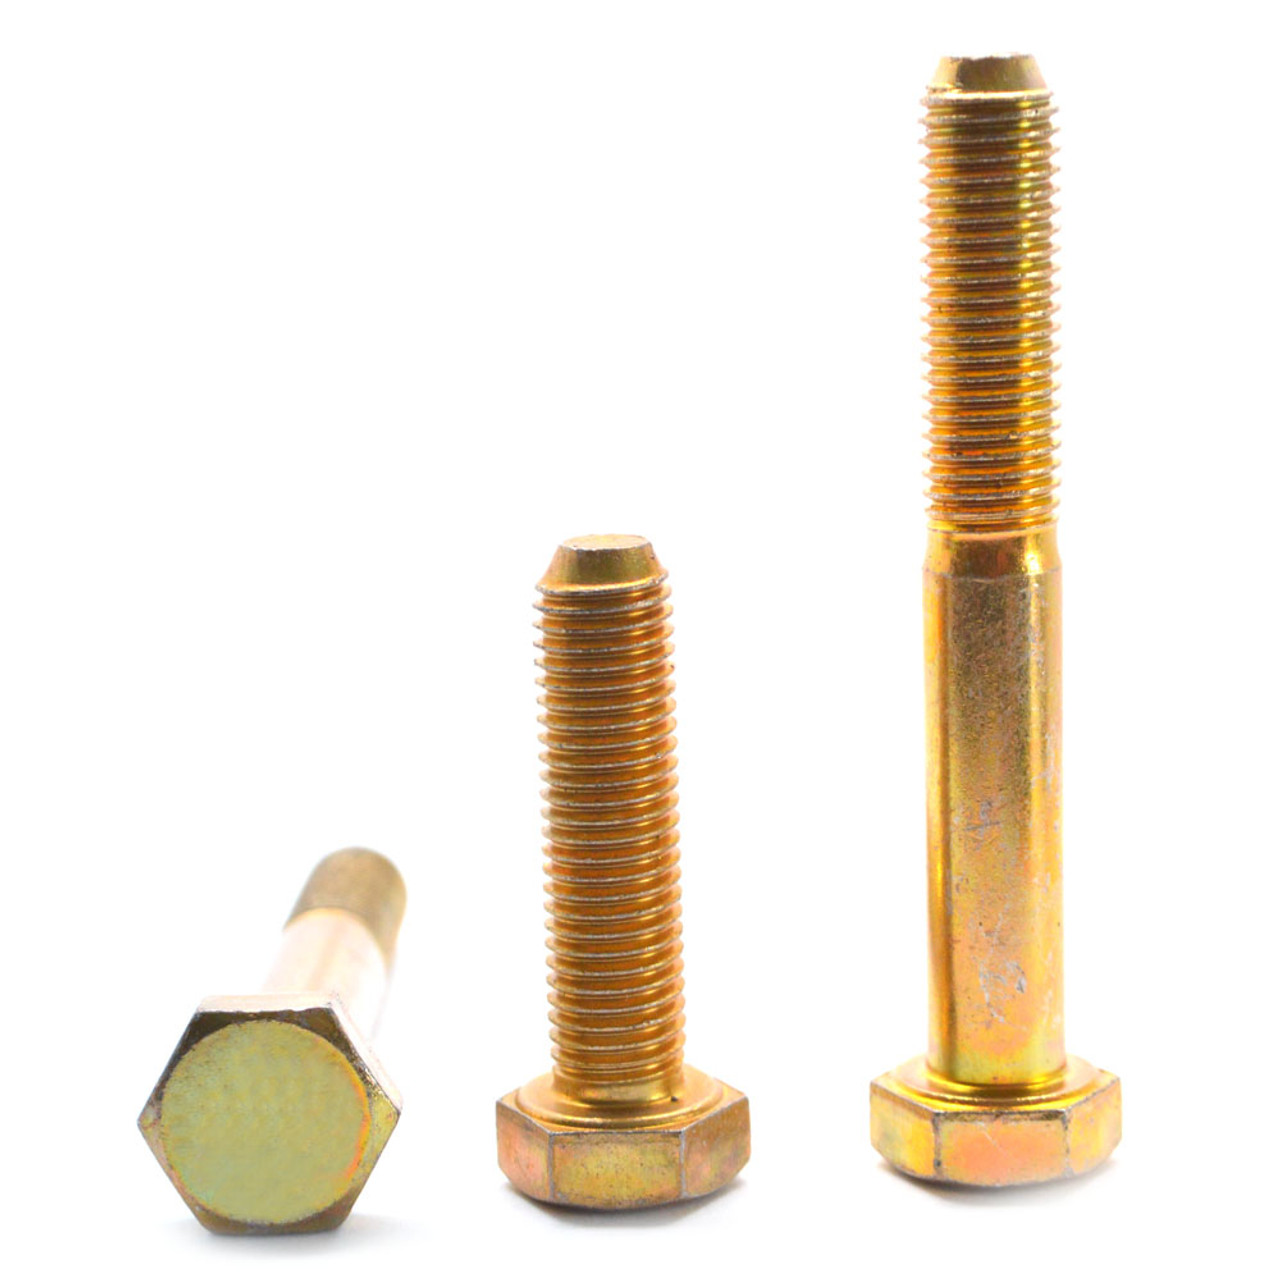 M14 x 2.00 x 90 MM (PT) Coarse Thread DIN 931 Class 10.9 Hex Cap Screw (Bolt) Alloy Steel Yellow Zinc Plated